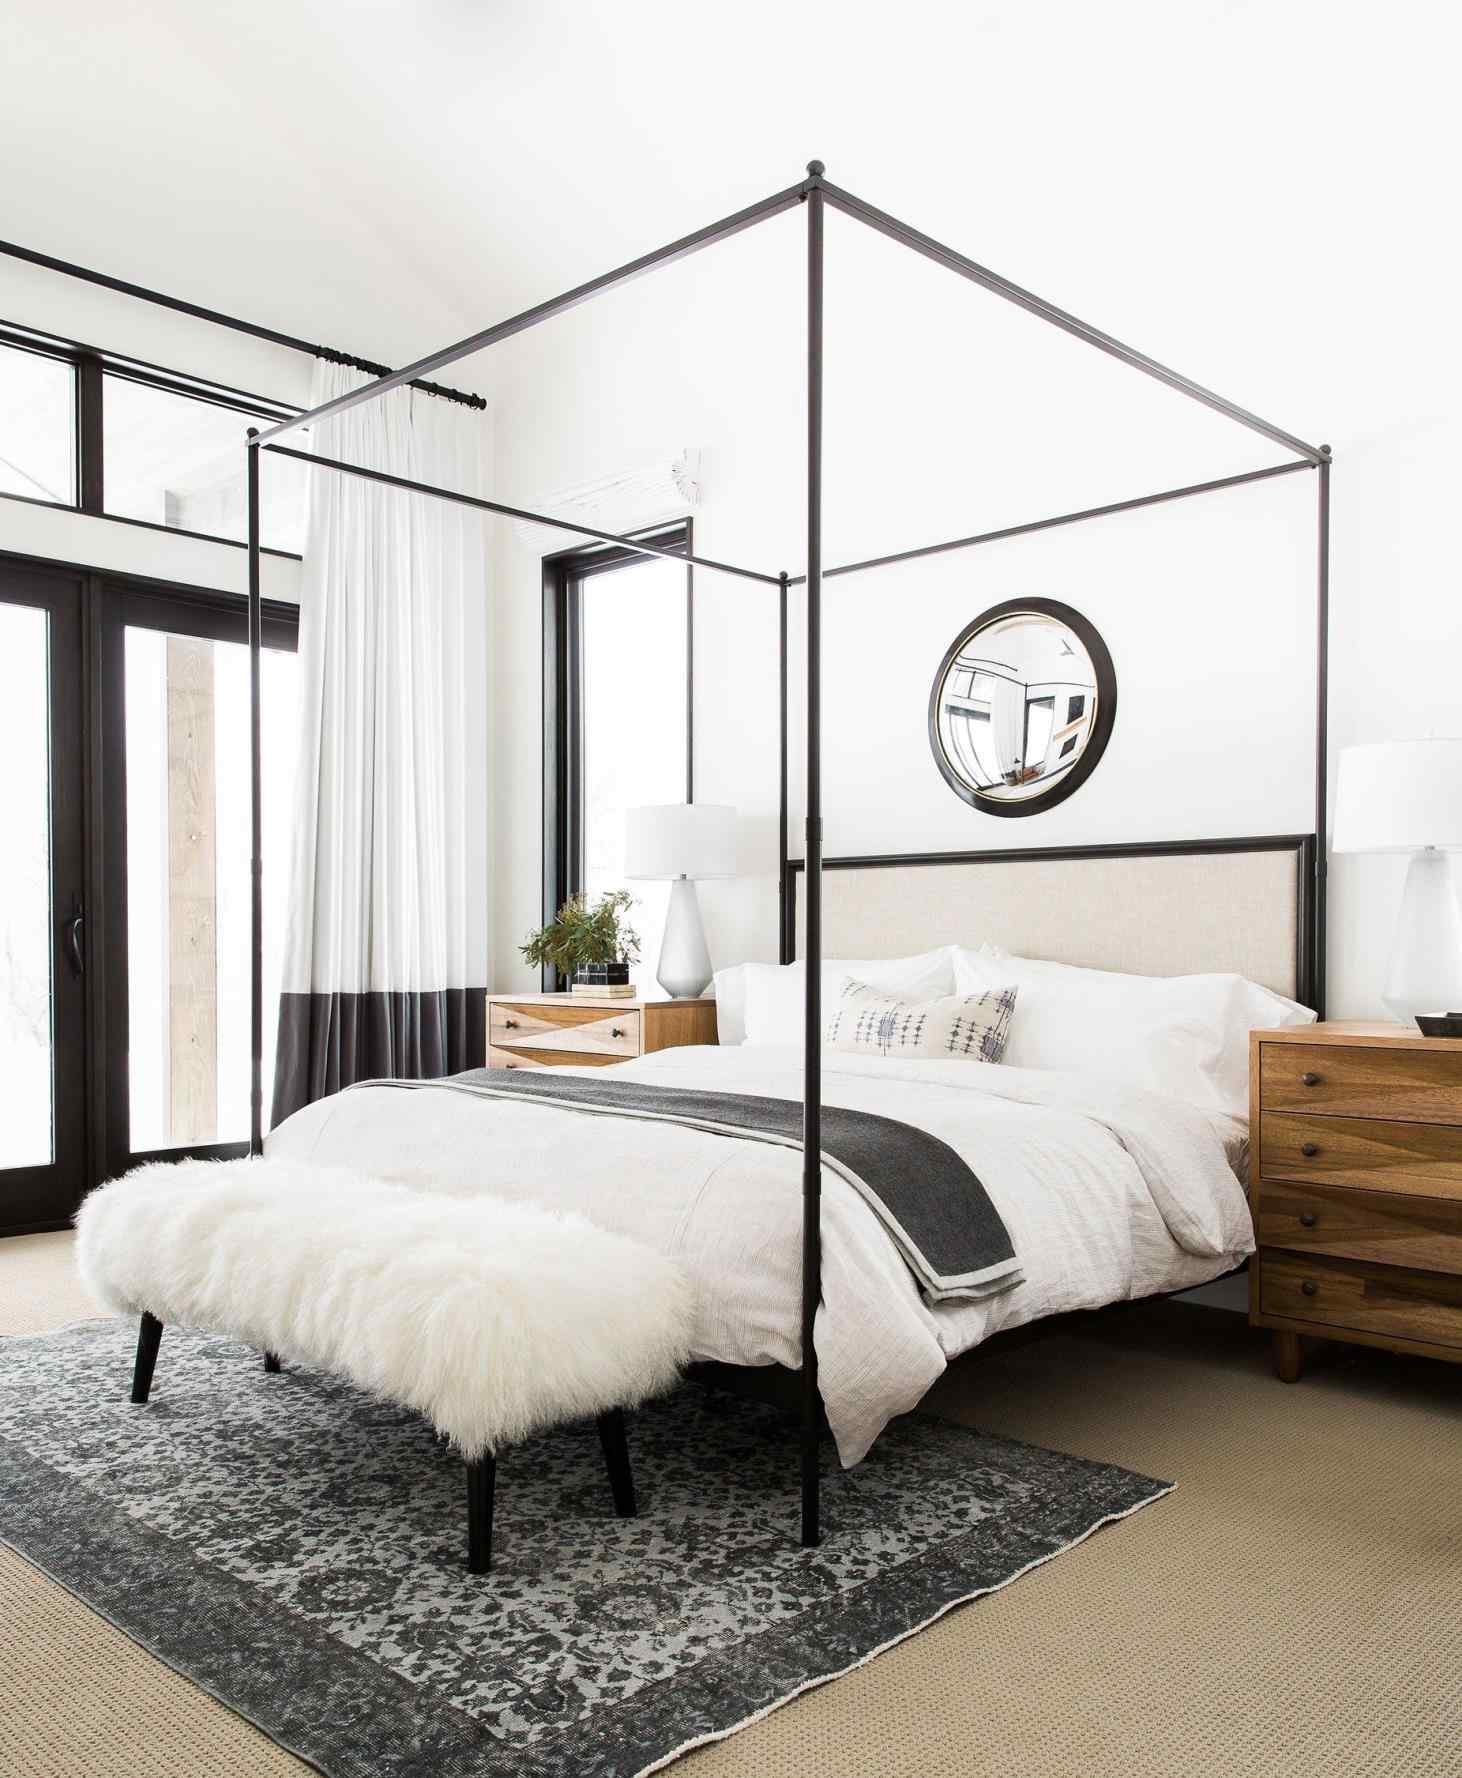 ballard designs bedroom furniture photo - 9